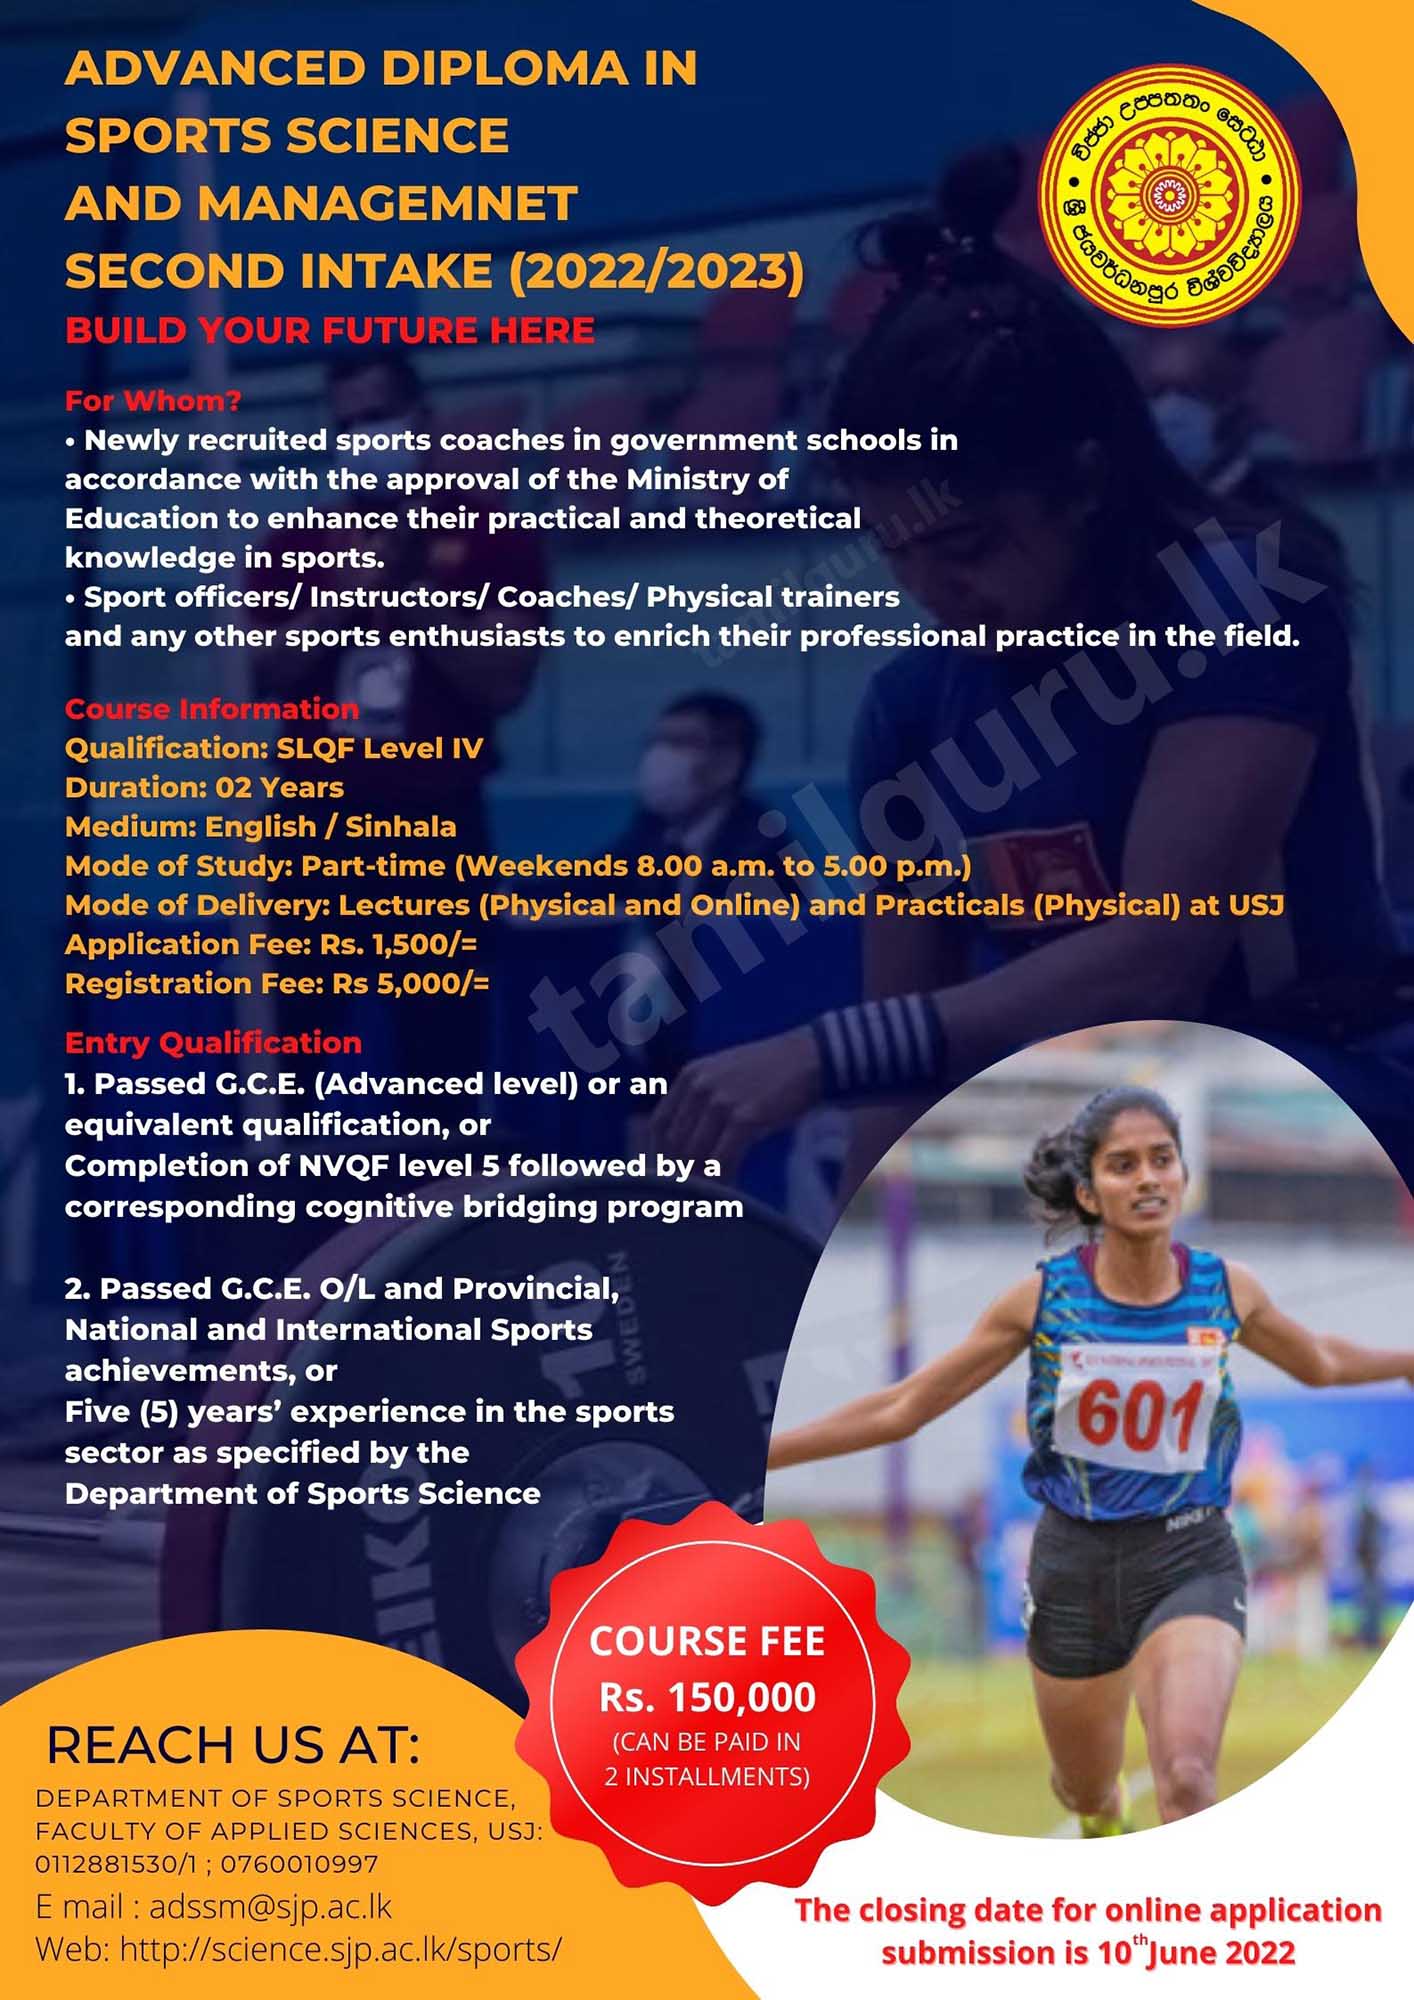 Advanced Diploma in Sports Science and Management (ADSSM) Course 2022/2023 - University of Sri Jayewardenepura